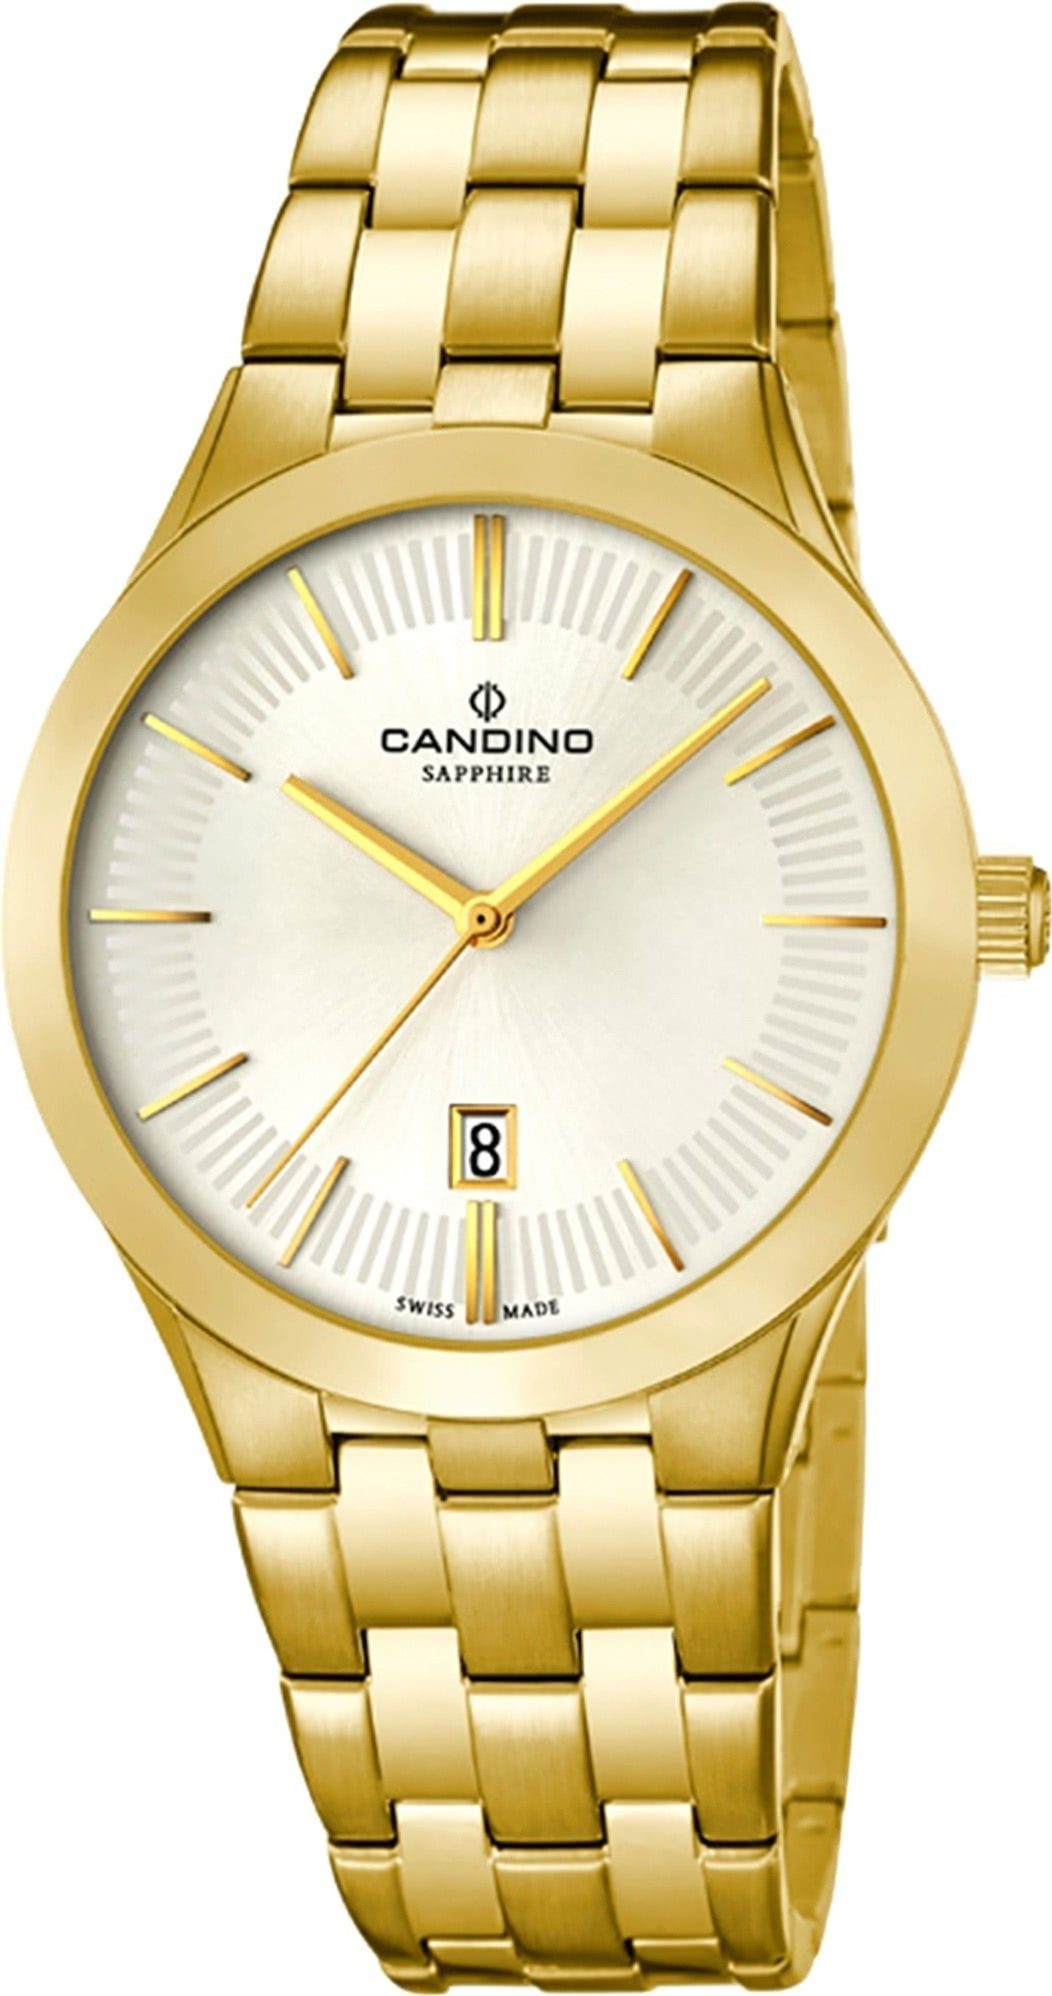 Damen Damen Armbanduhr Quarzuhr Candino rund, Candino Edelstahlarmband Quarzuhr C4545/1, Luxus gold, Analog